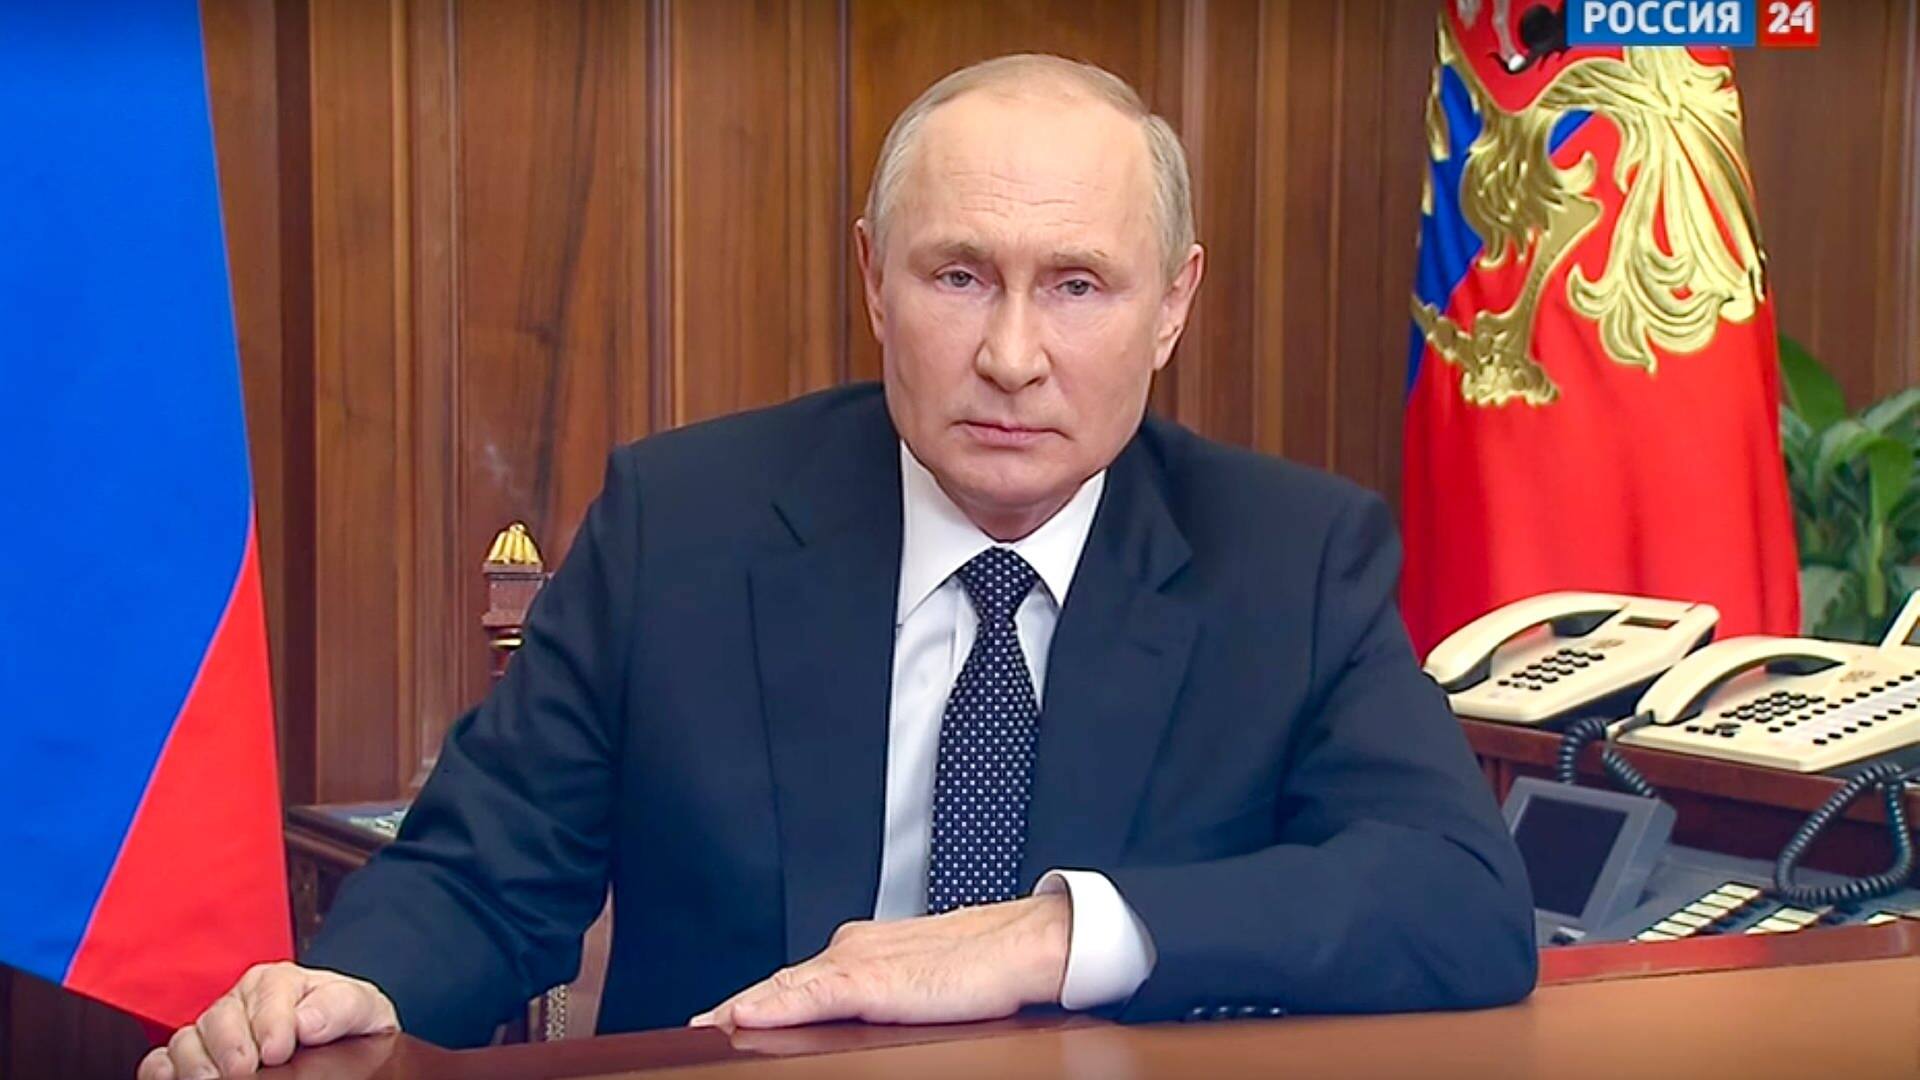 Putin (Foto: dpa Bildfunk, picture alliance/dpa/Russian Presidential Press Service/AP | Uncredited)